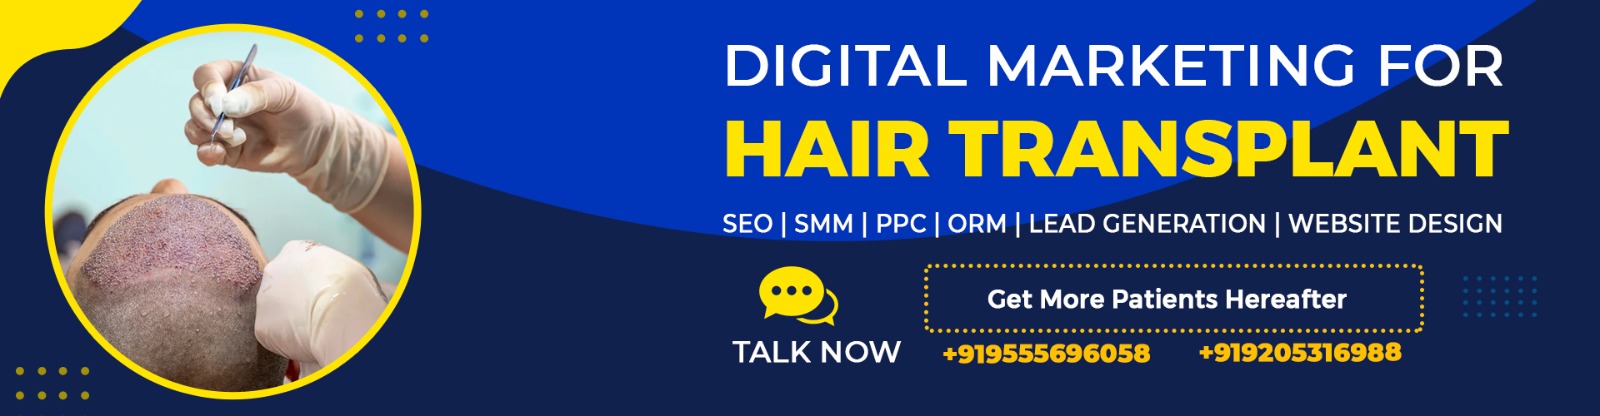 hair transplant seo smo ppc digital marketing